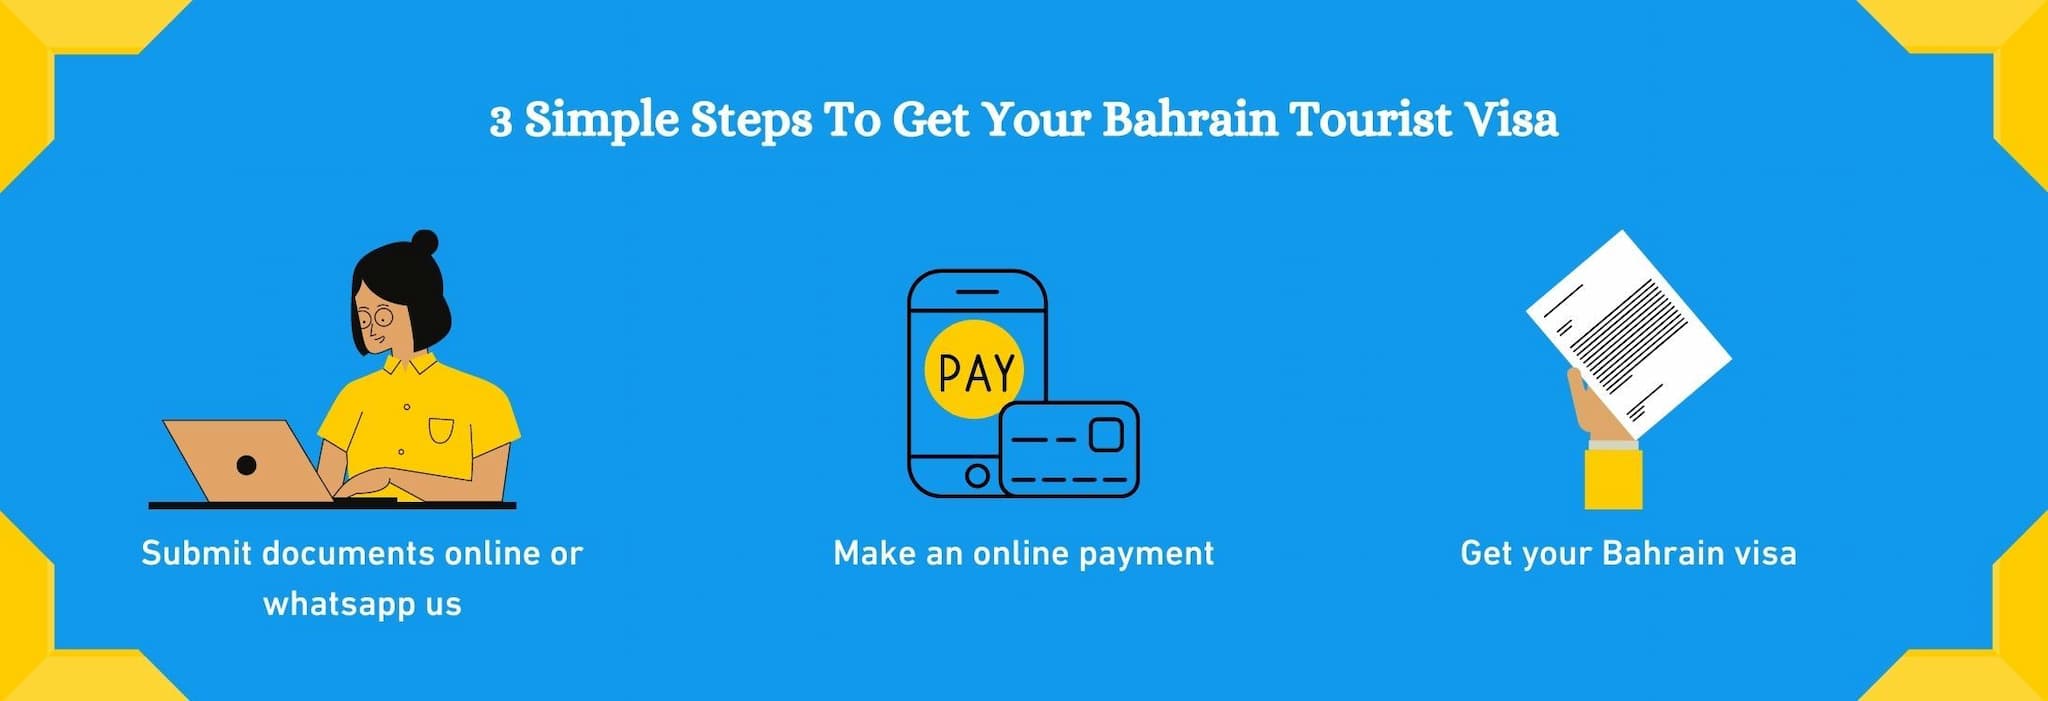 Steps To Get A Bahrain Tourist Visa